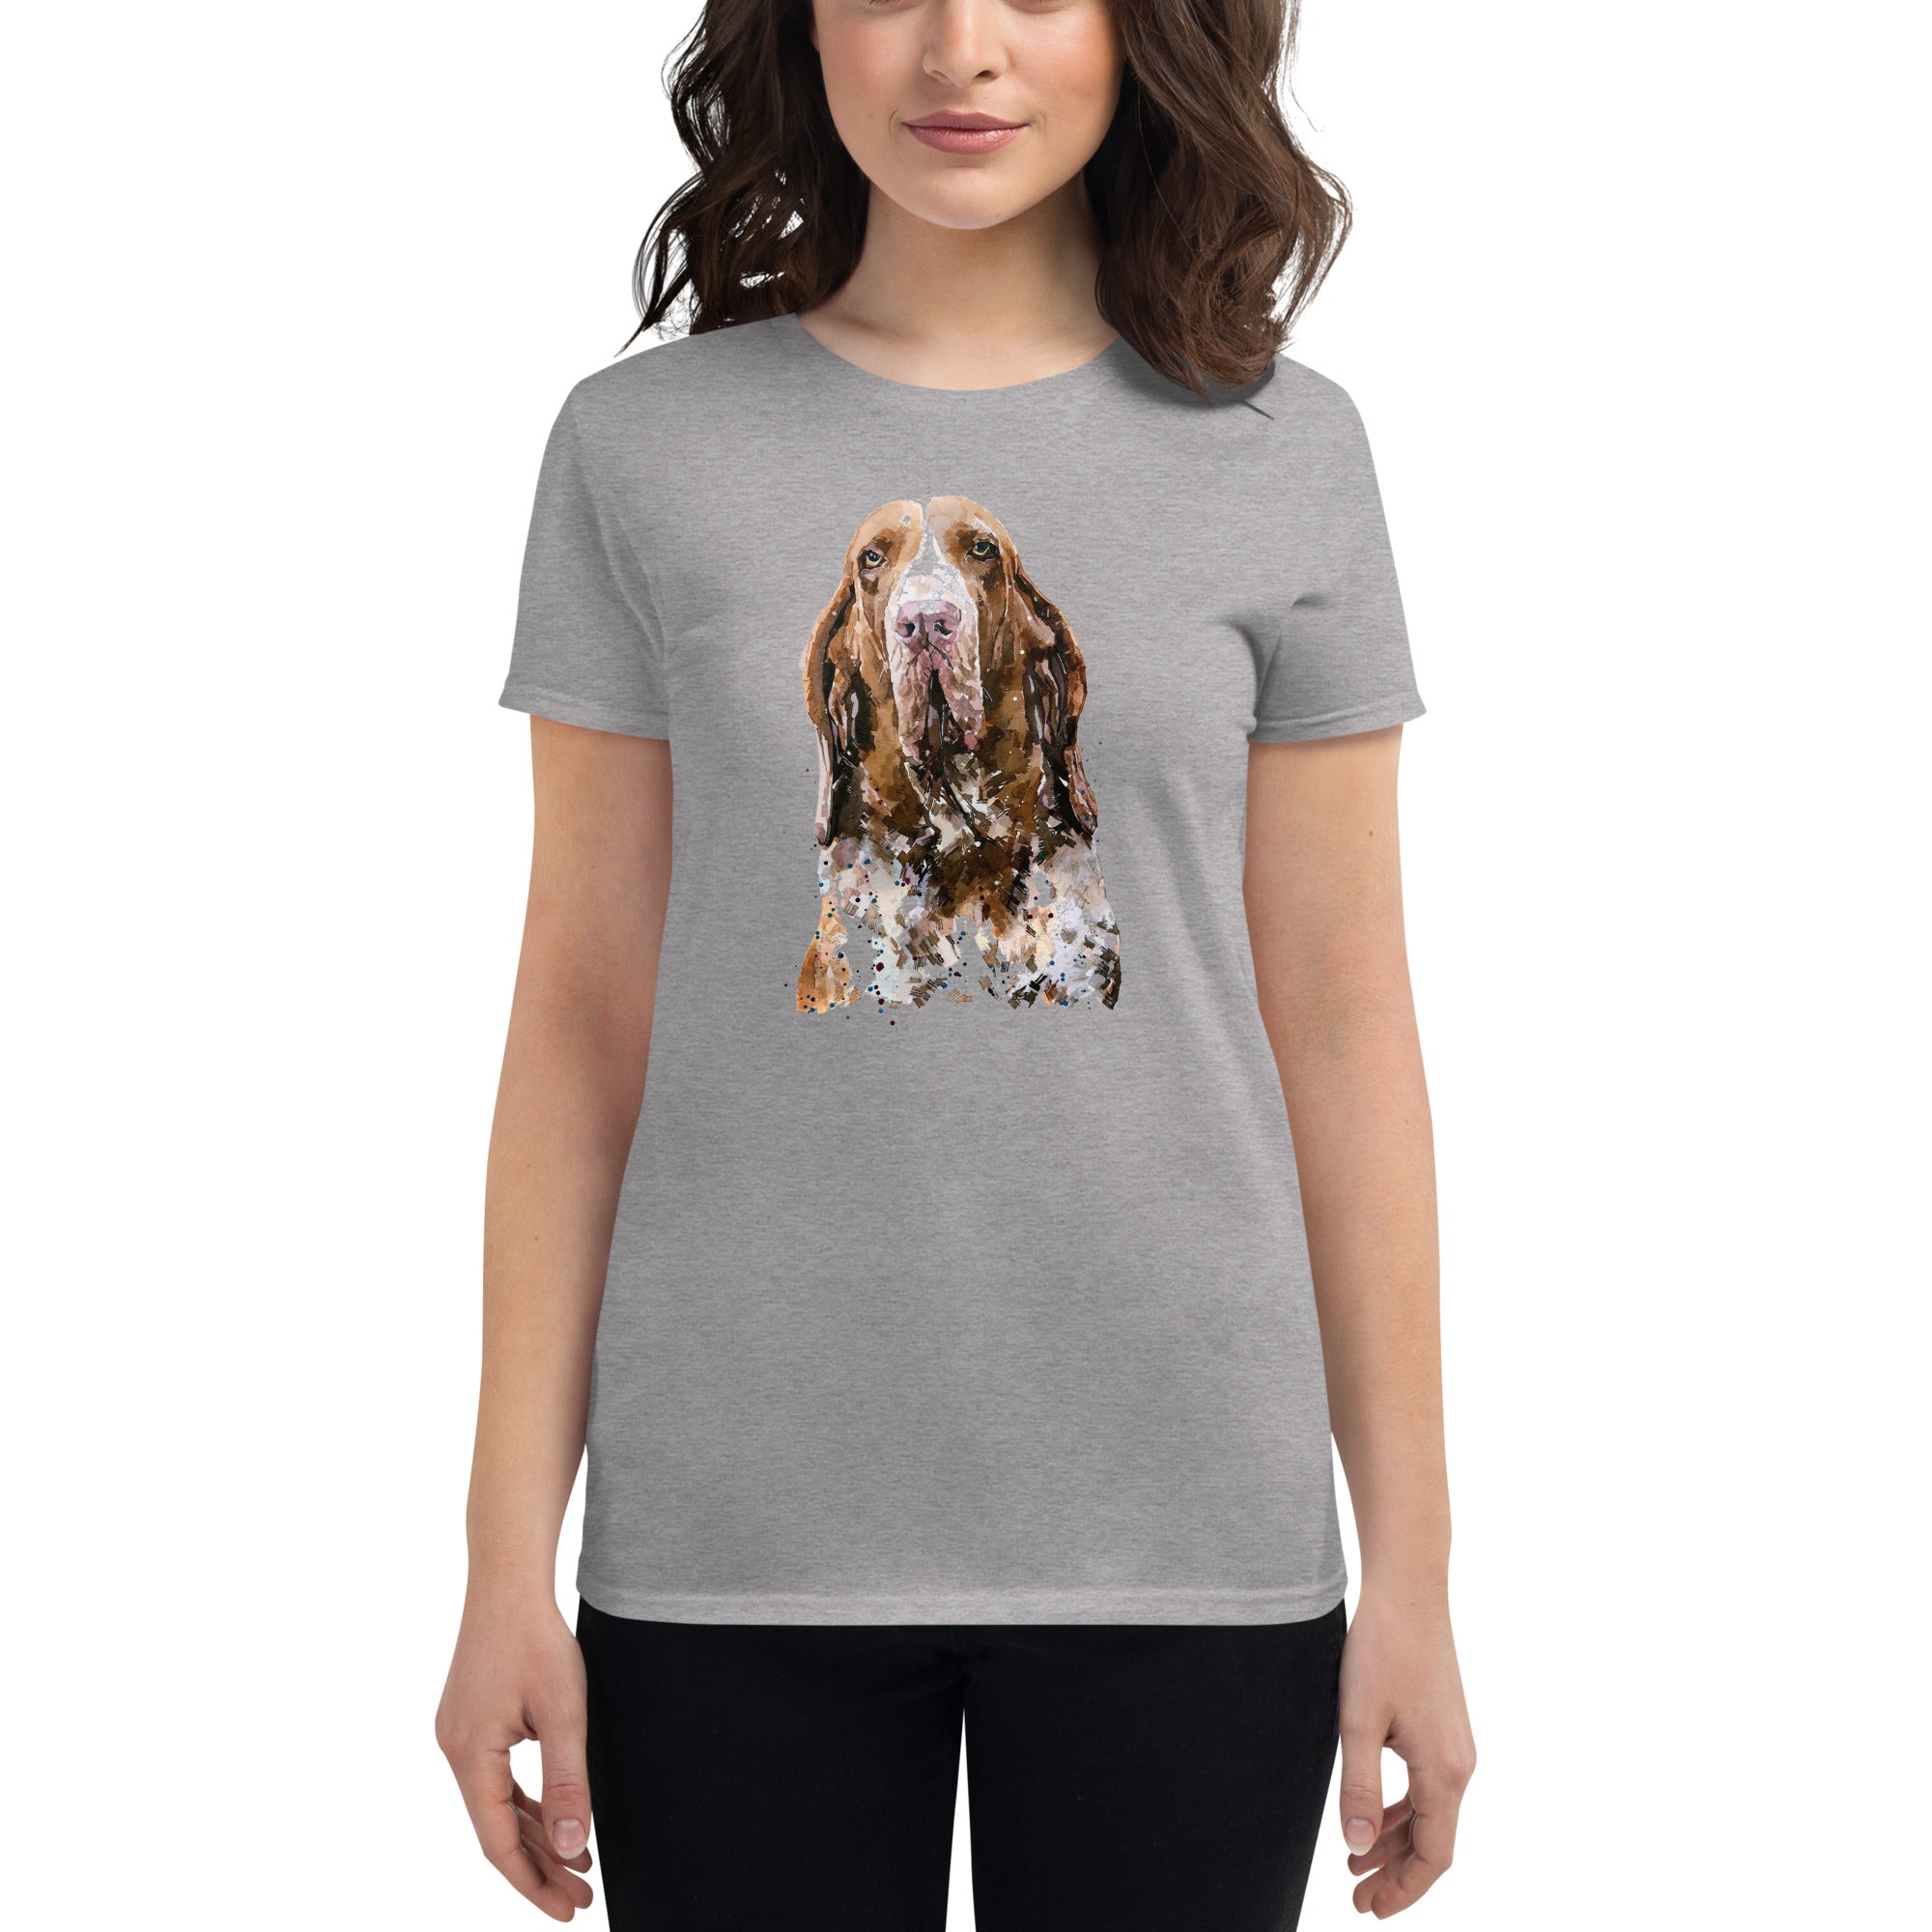 Bracco Italiano Women's Fashion Fit T-Shirt | Gildan 880